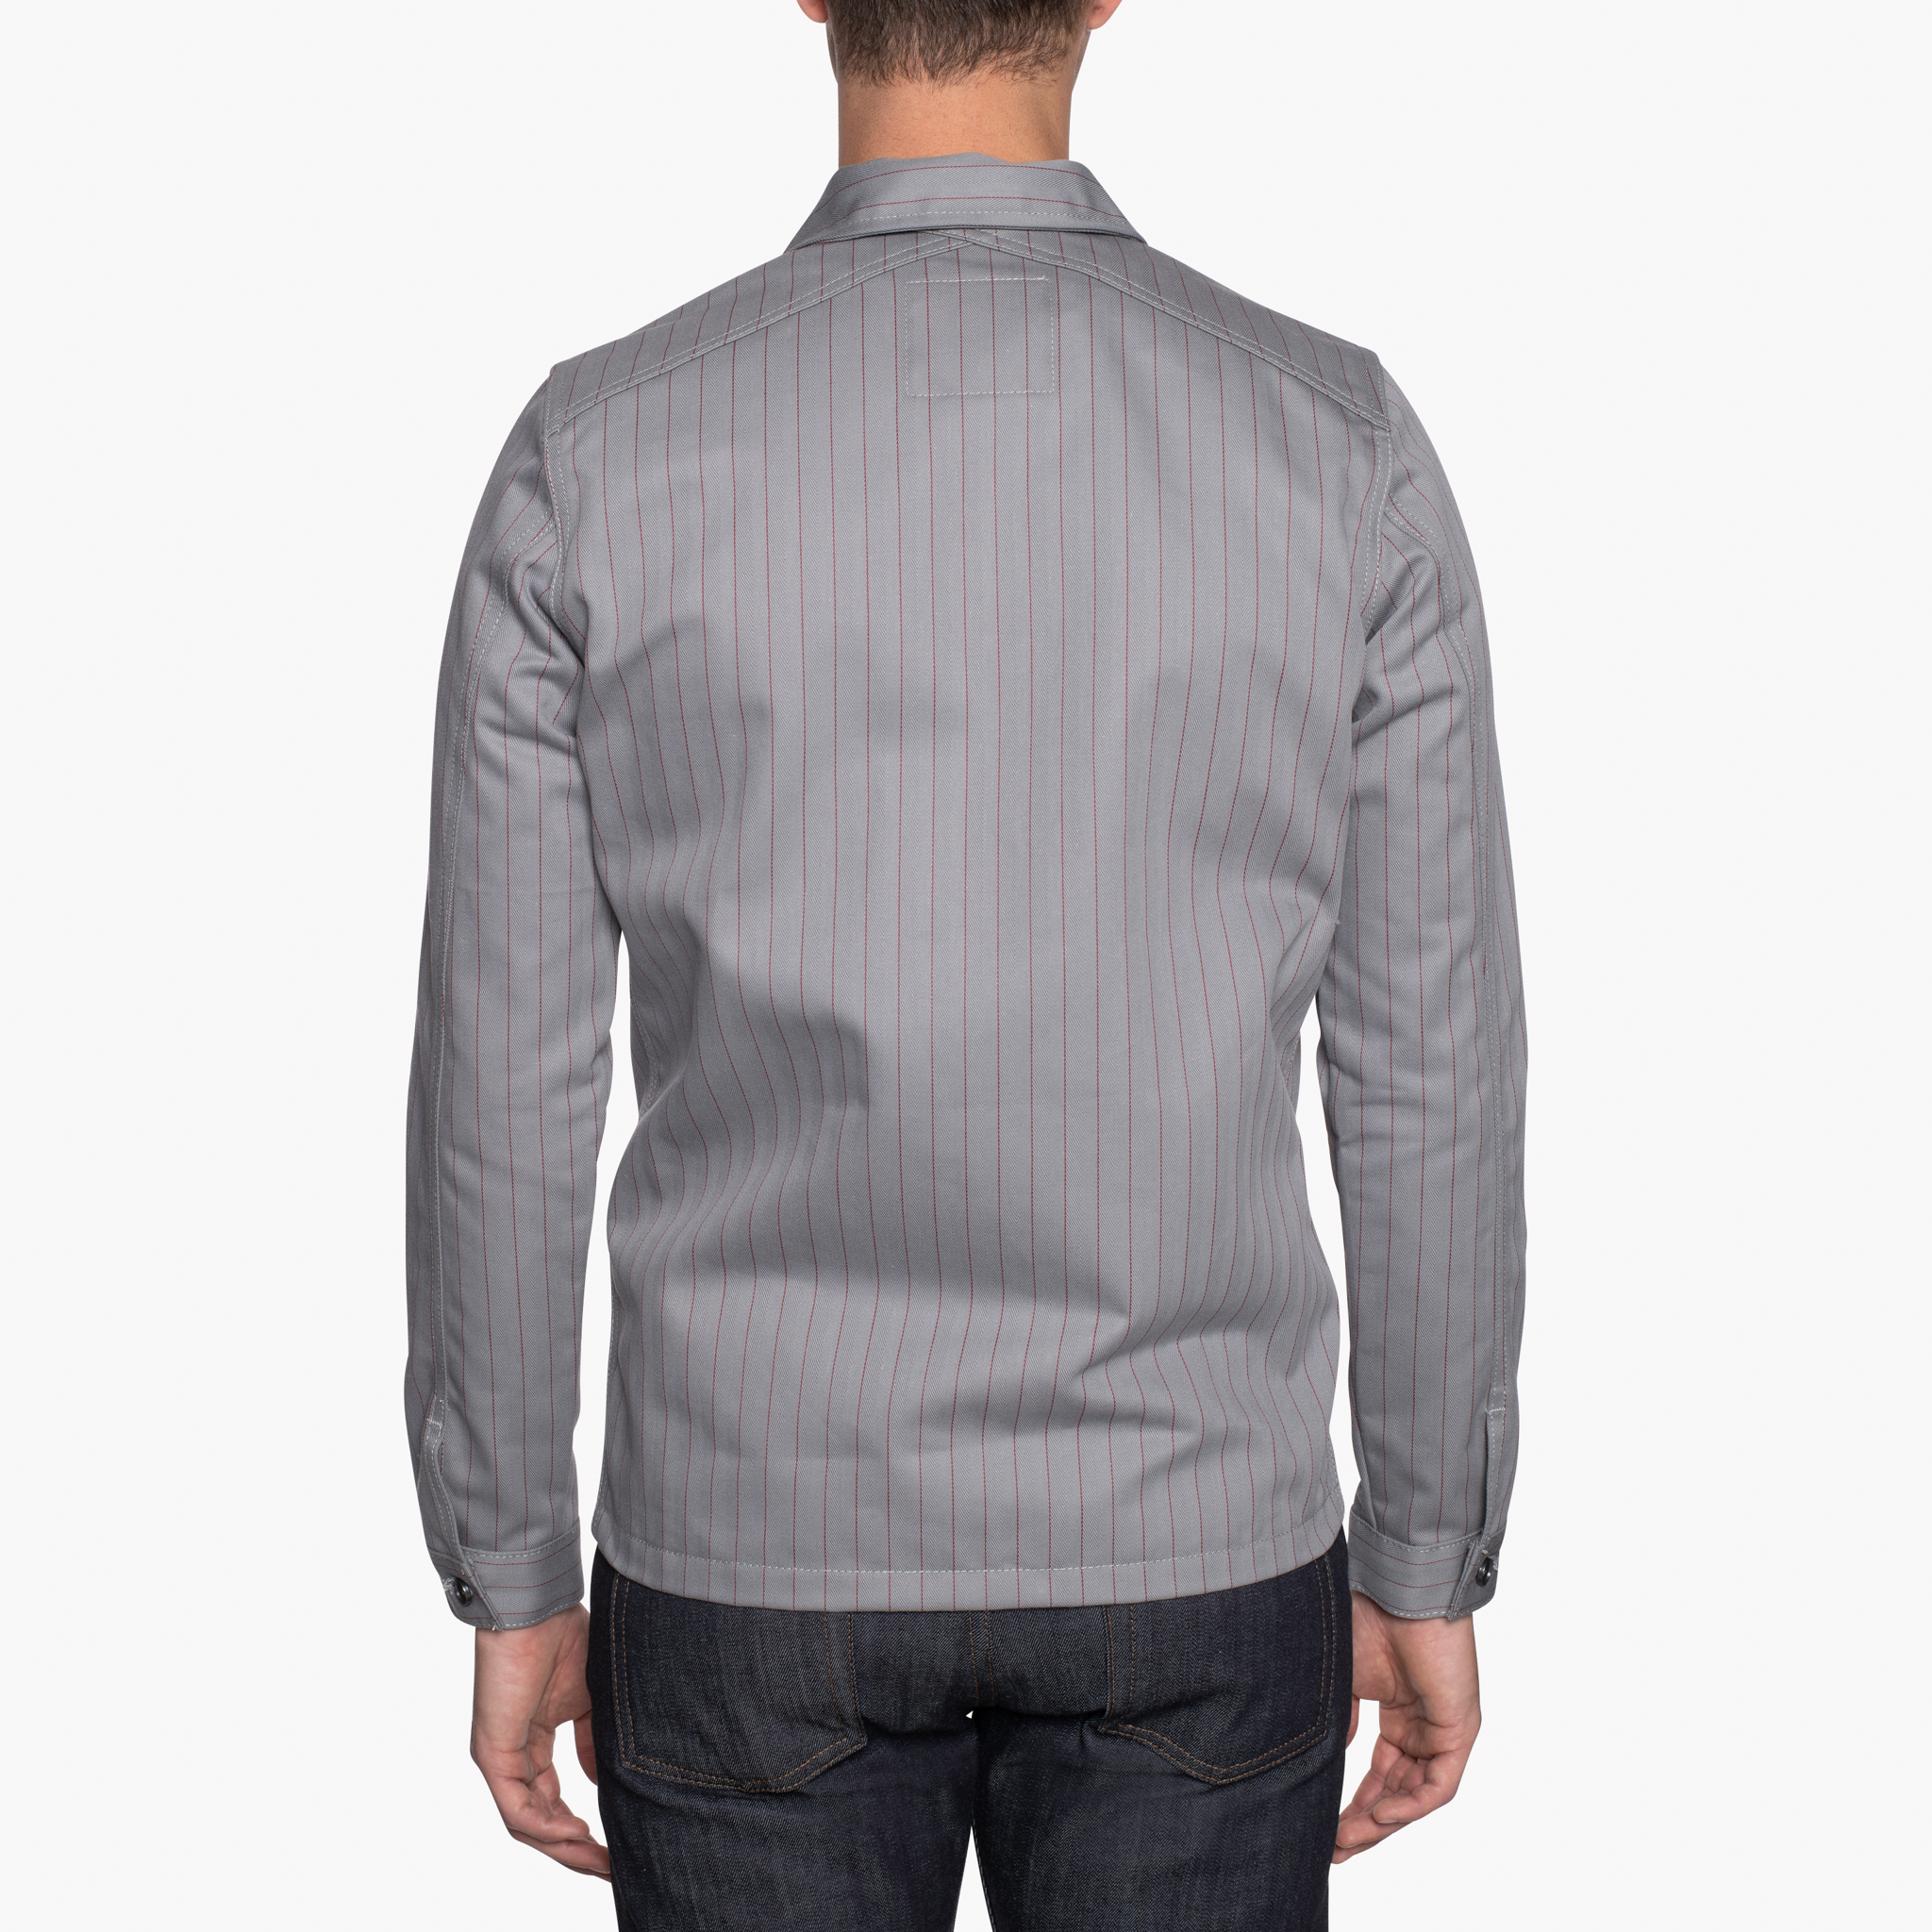  Work Shirt - Repro Workwear Twill - Grey - back 